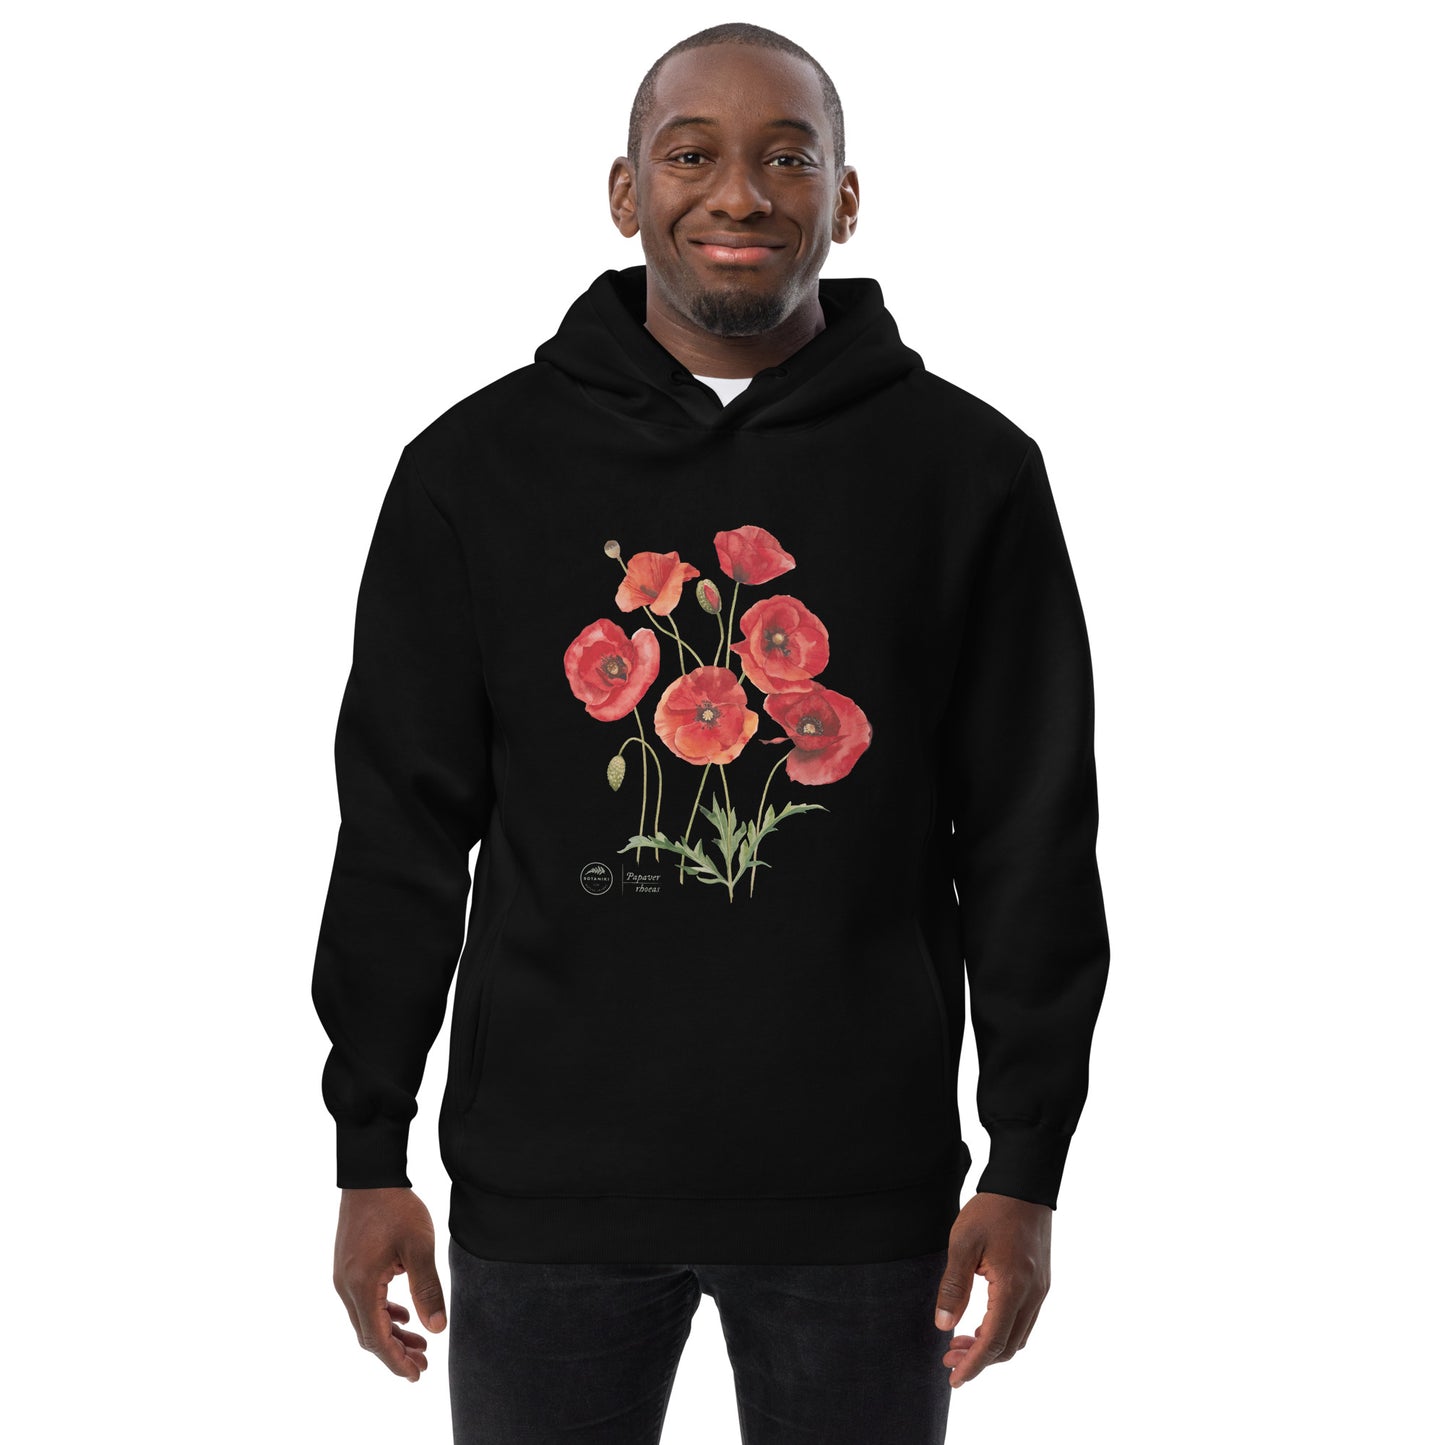 Unisex fashion hoodie - Poppies